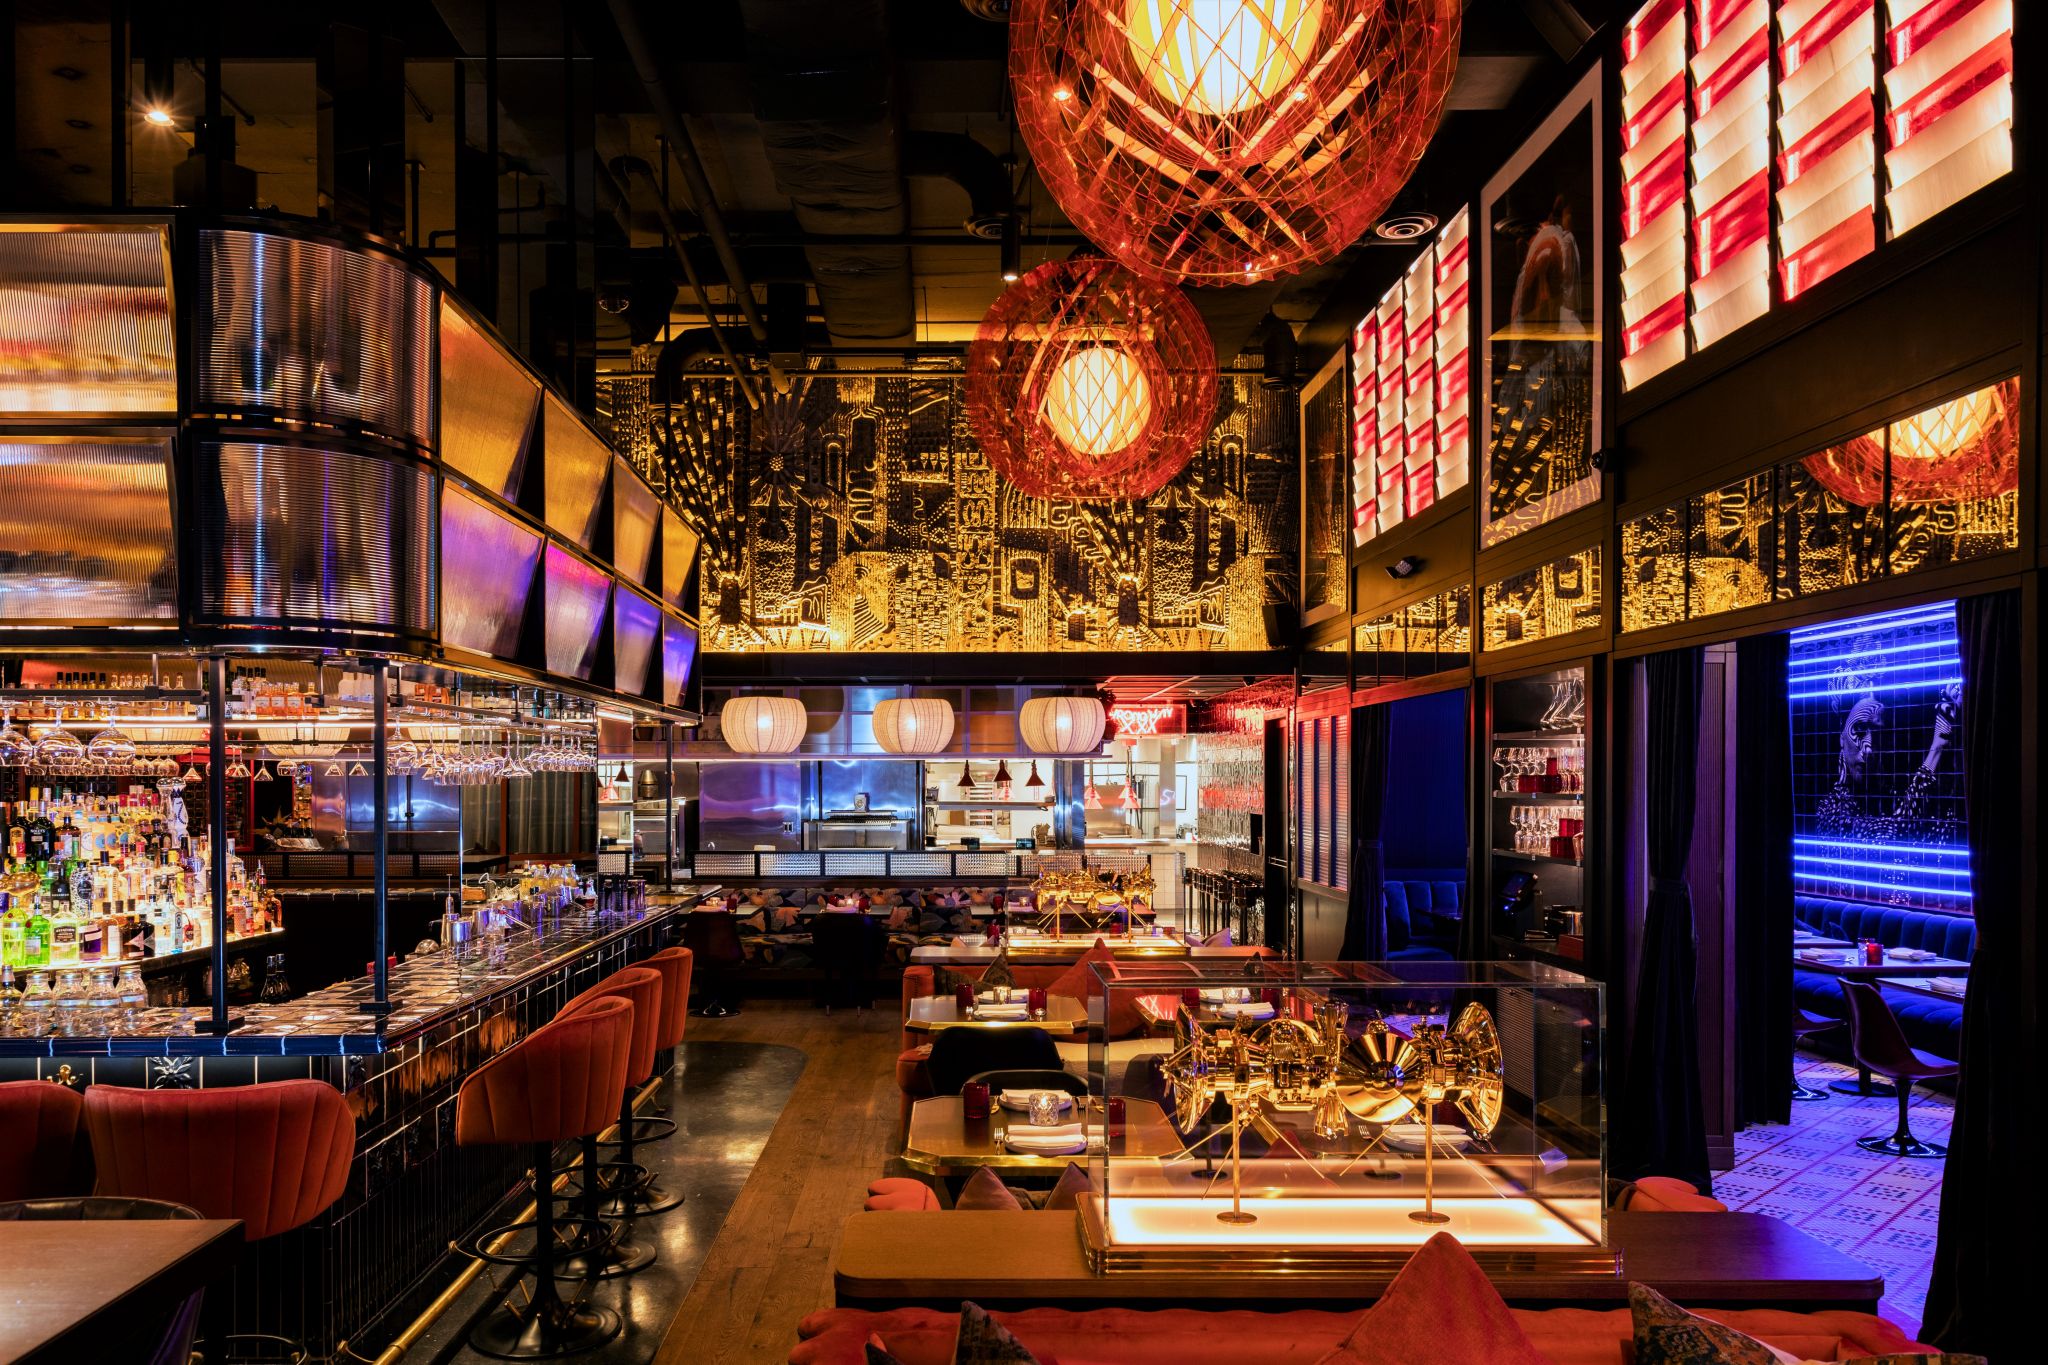 GALLERY: Houston restaurants with swanky design